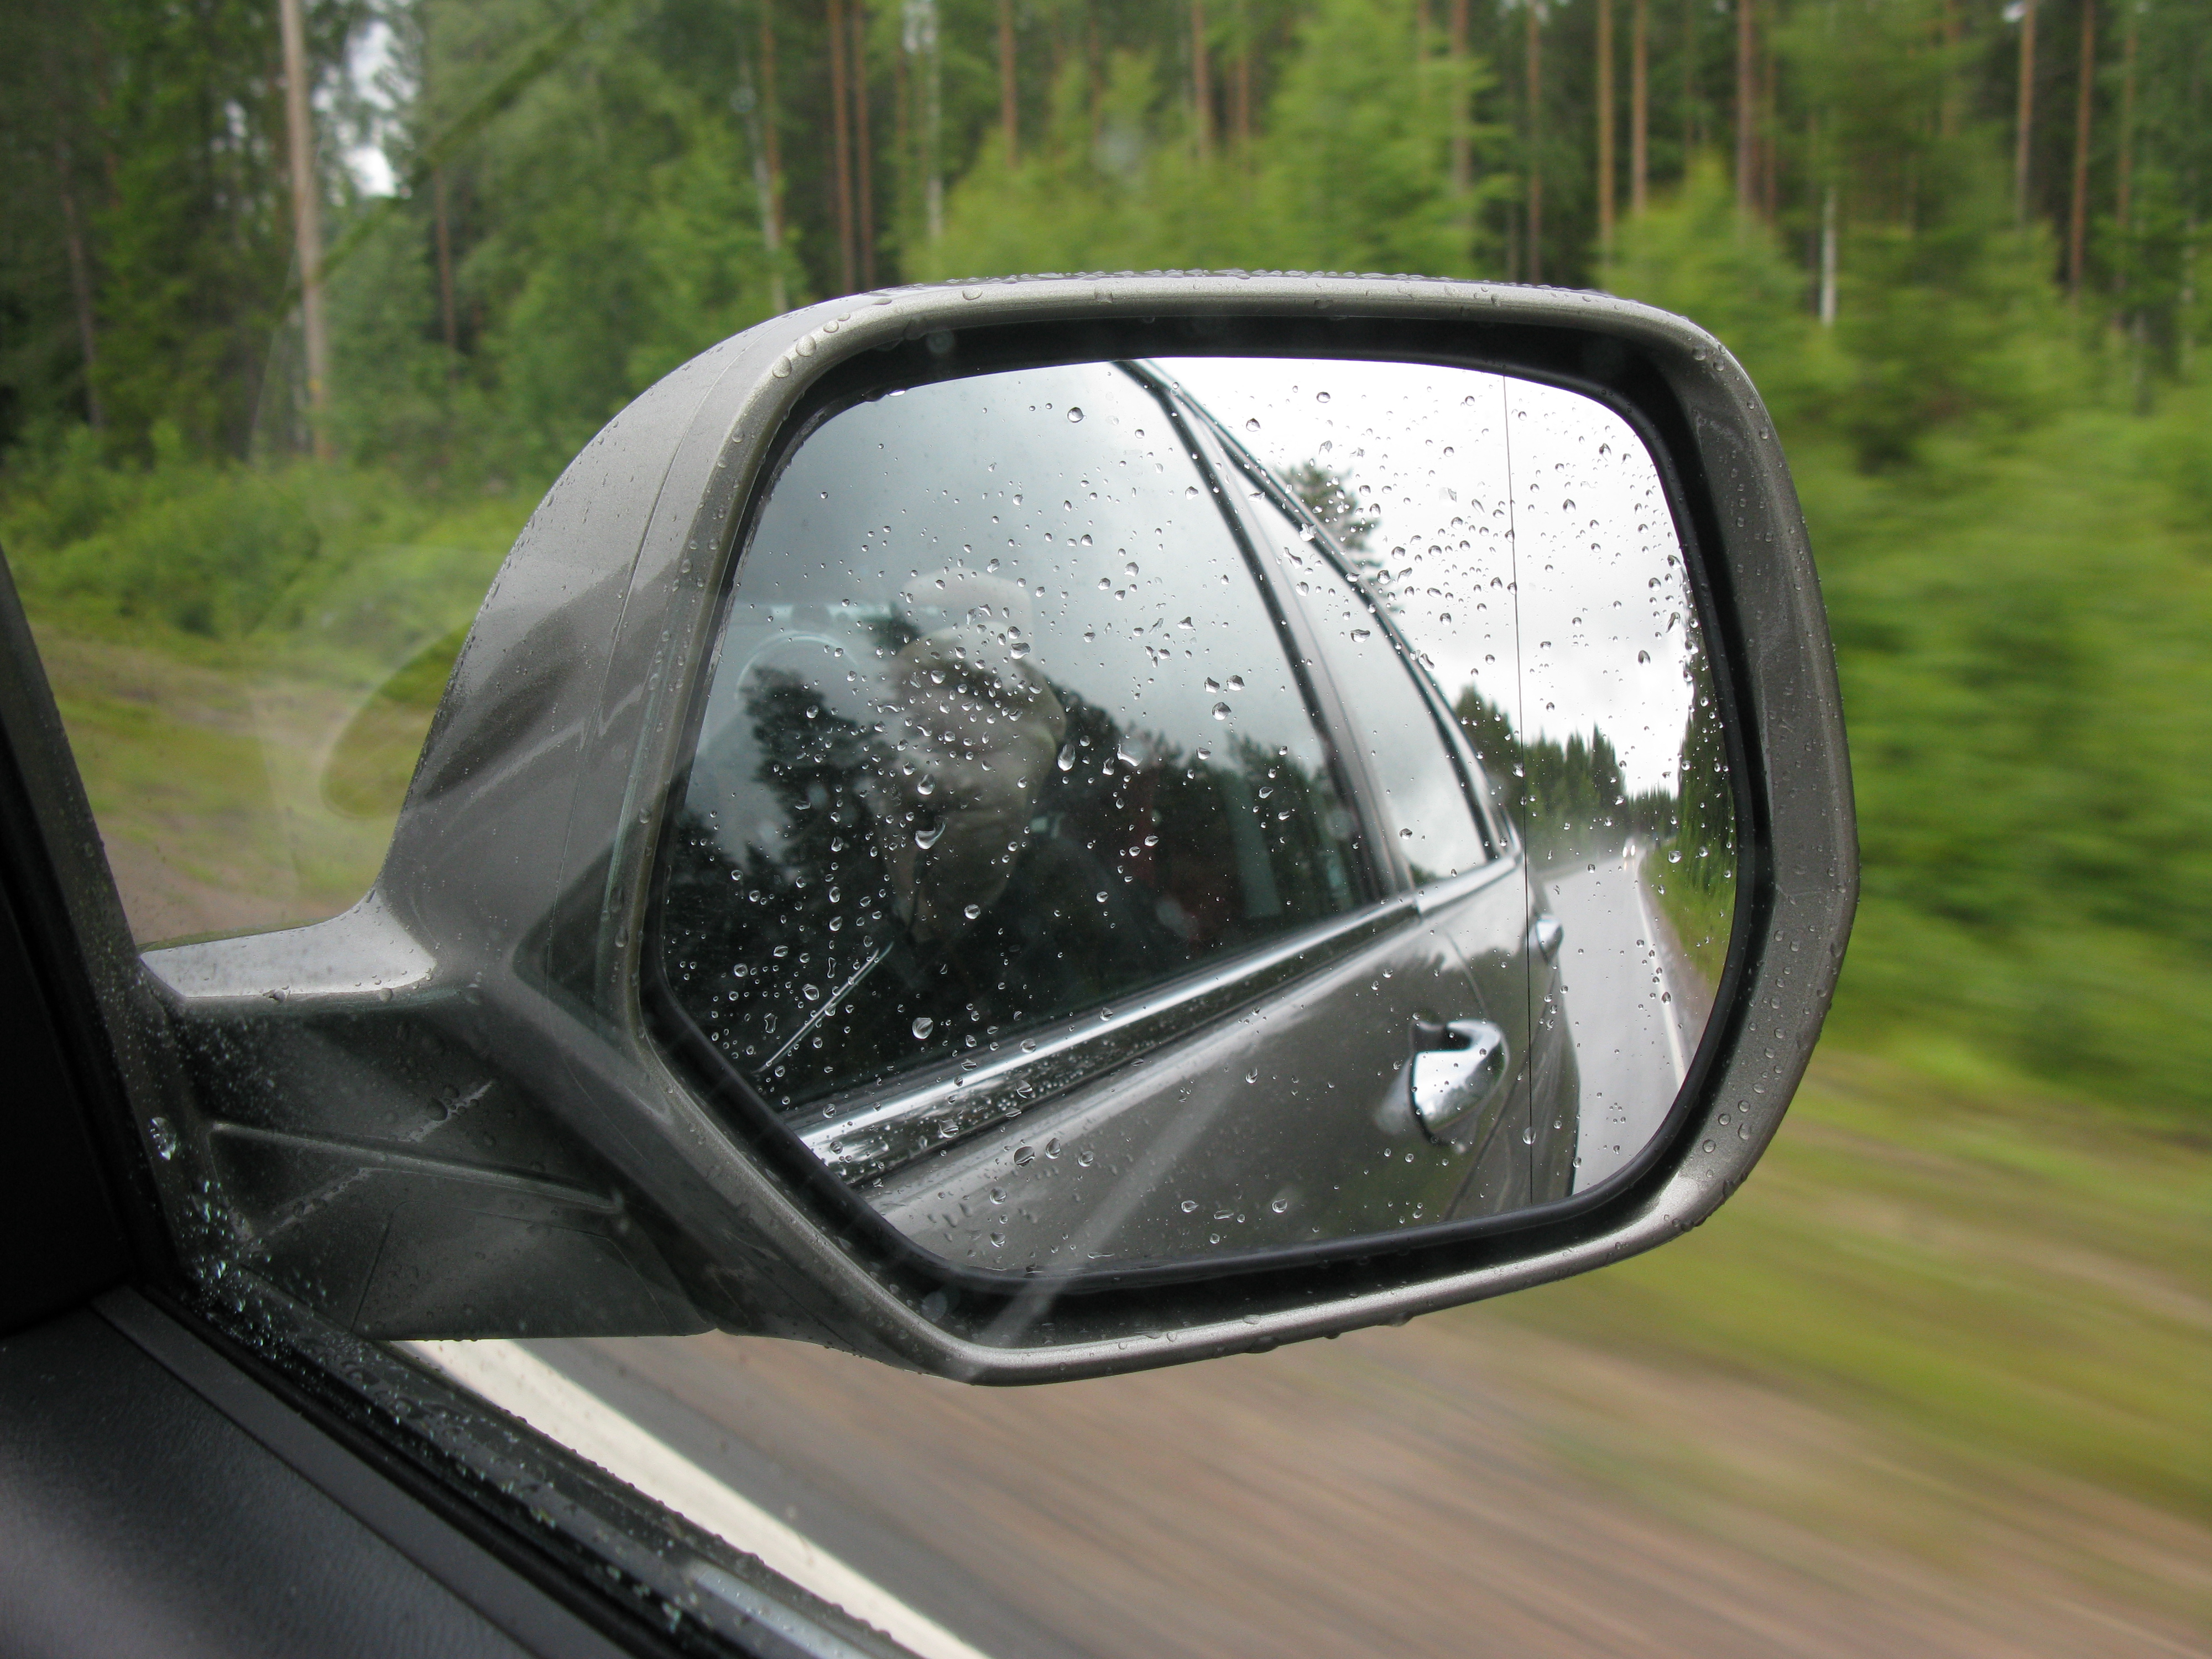 File:CRV side mirror.JPG - Wikimedia Commons